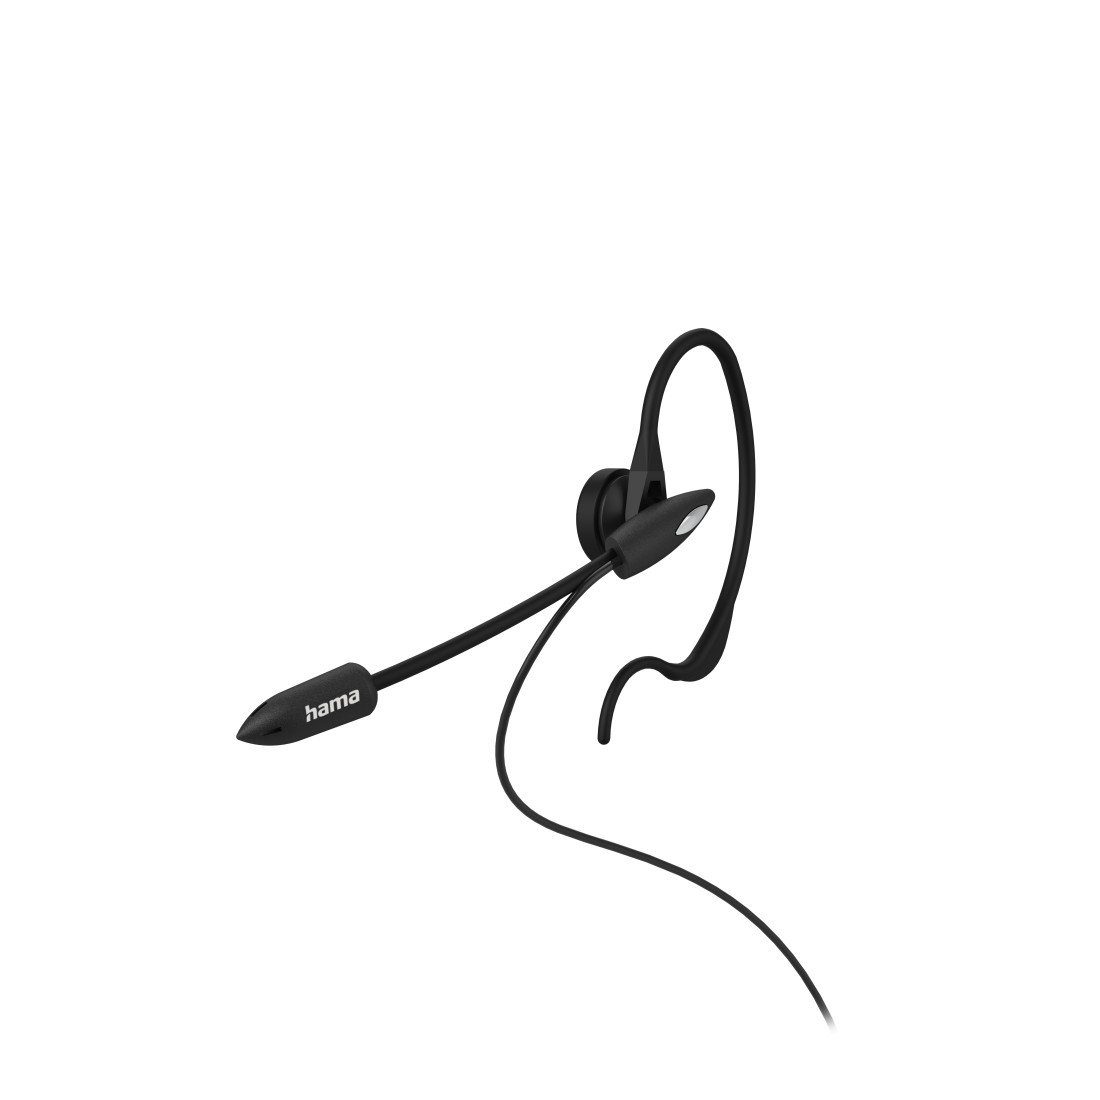 Hama In-Ear-Headset Headset für schnurlose Telefone, 2,5-mm-Klinke